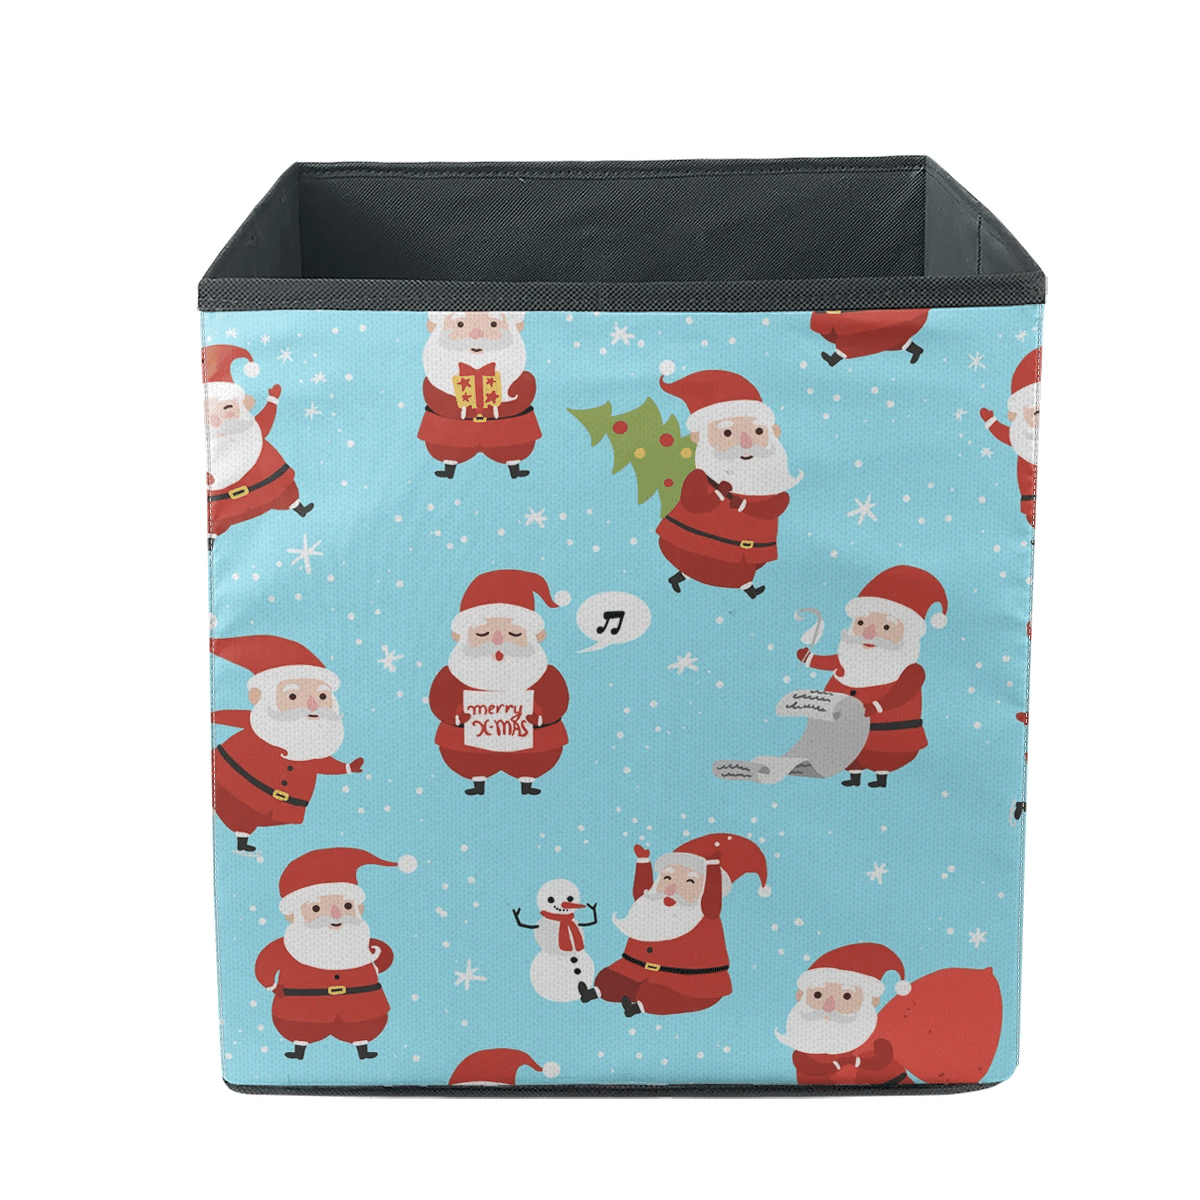 Lovely Moments Santa Preparing For Christmas Holiday Storage Bin Storage Cube